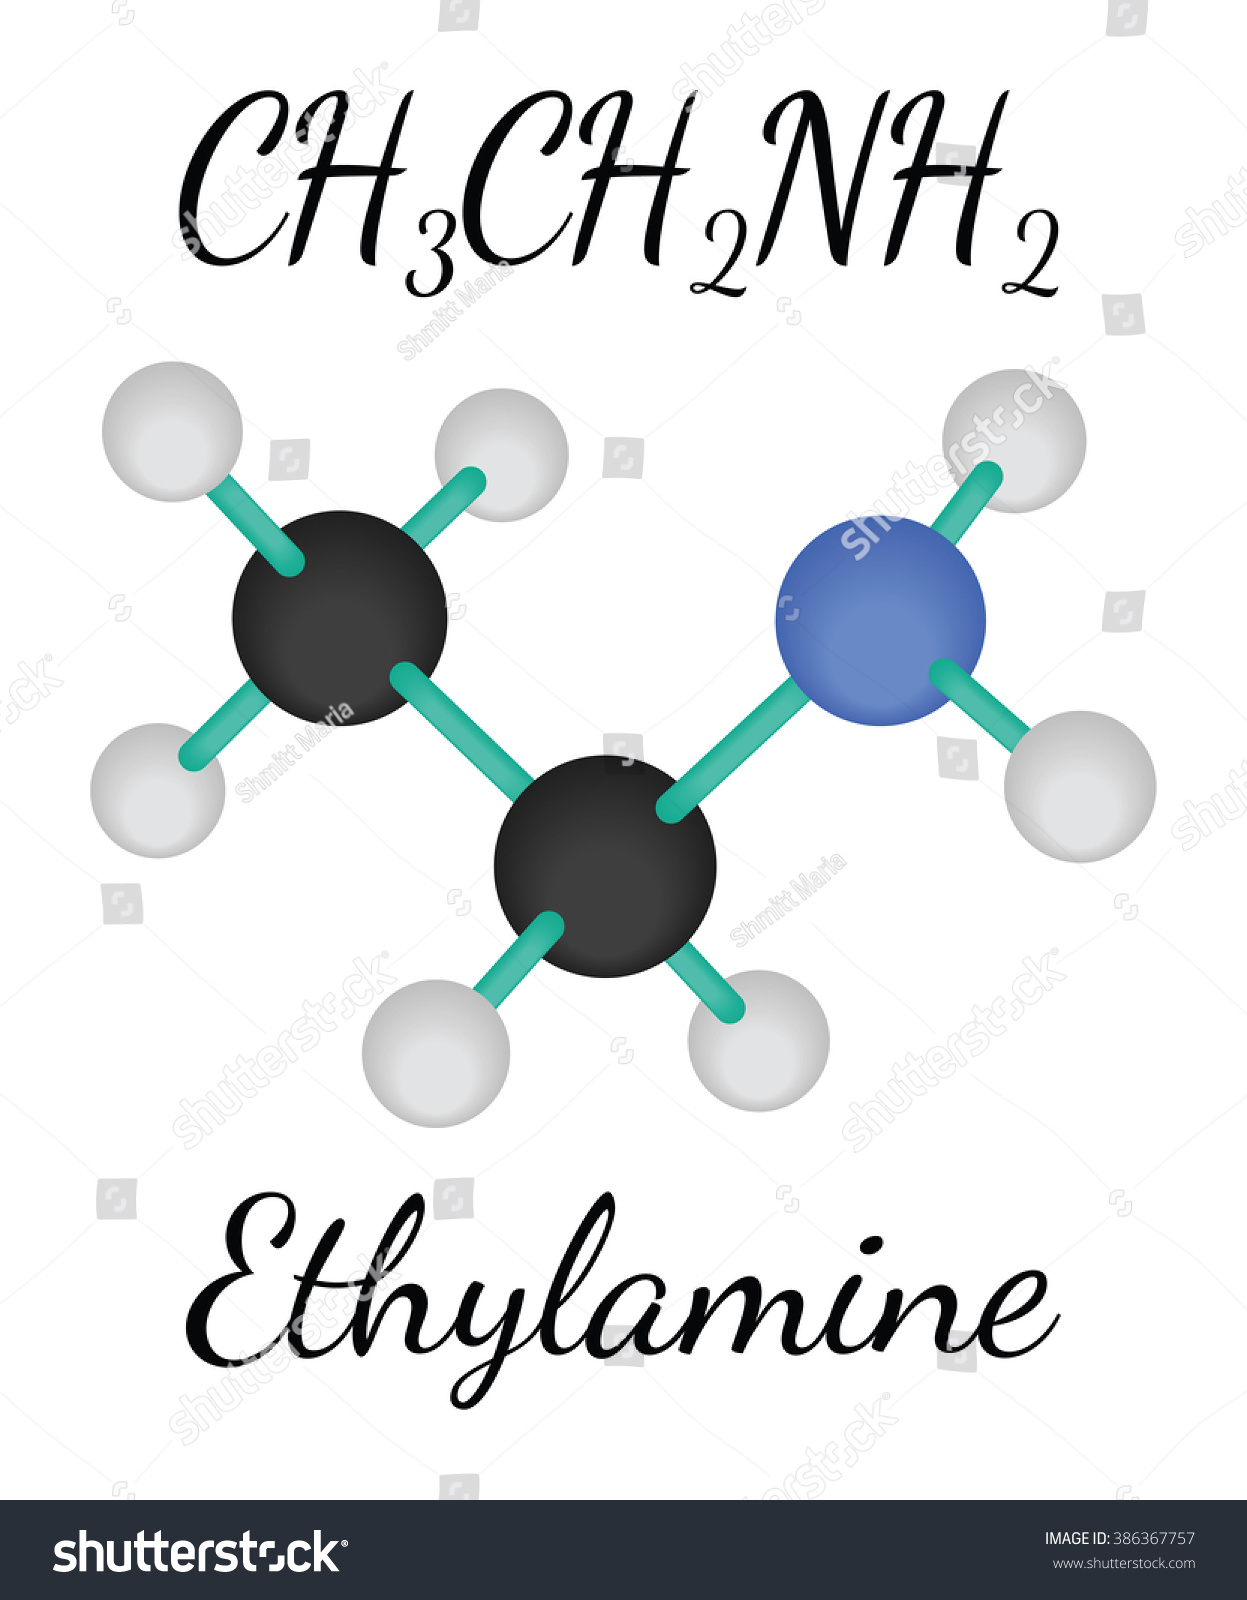 Ch3ch2nh2 Ethylamine Molecule Stok Vektör (Telifsiz) 386367757 Shutterstock...